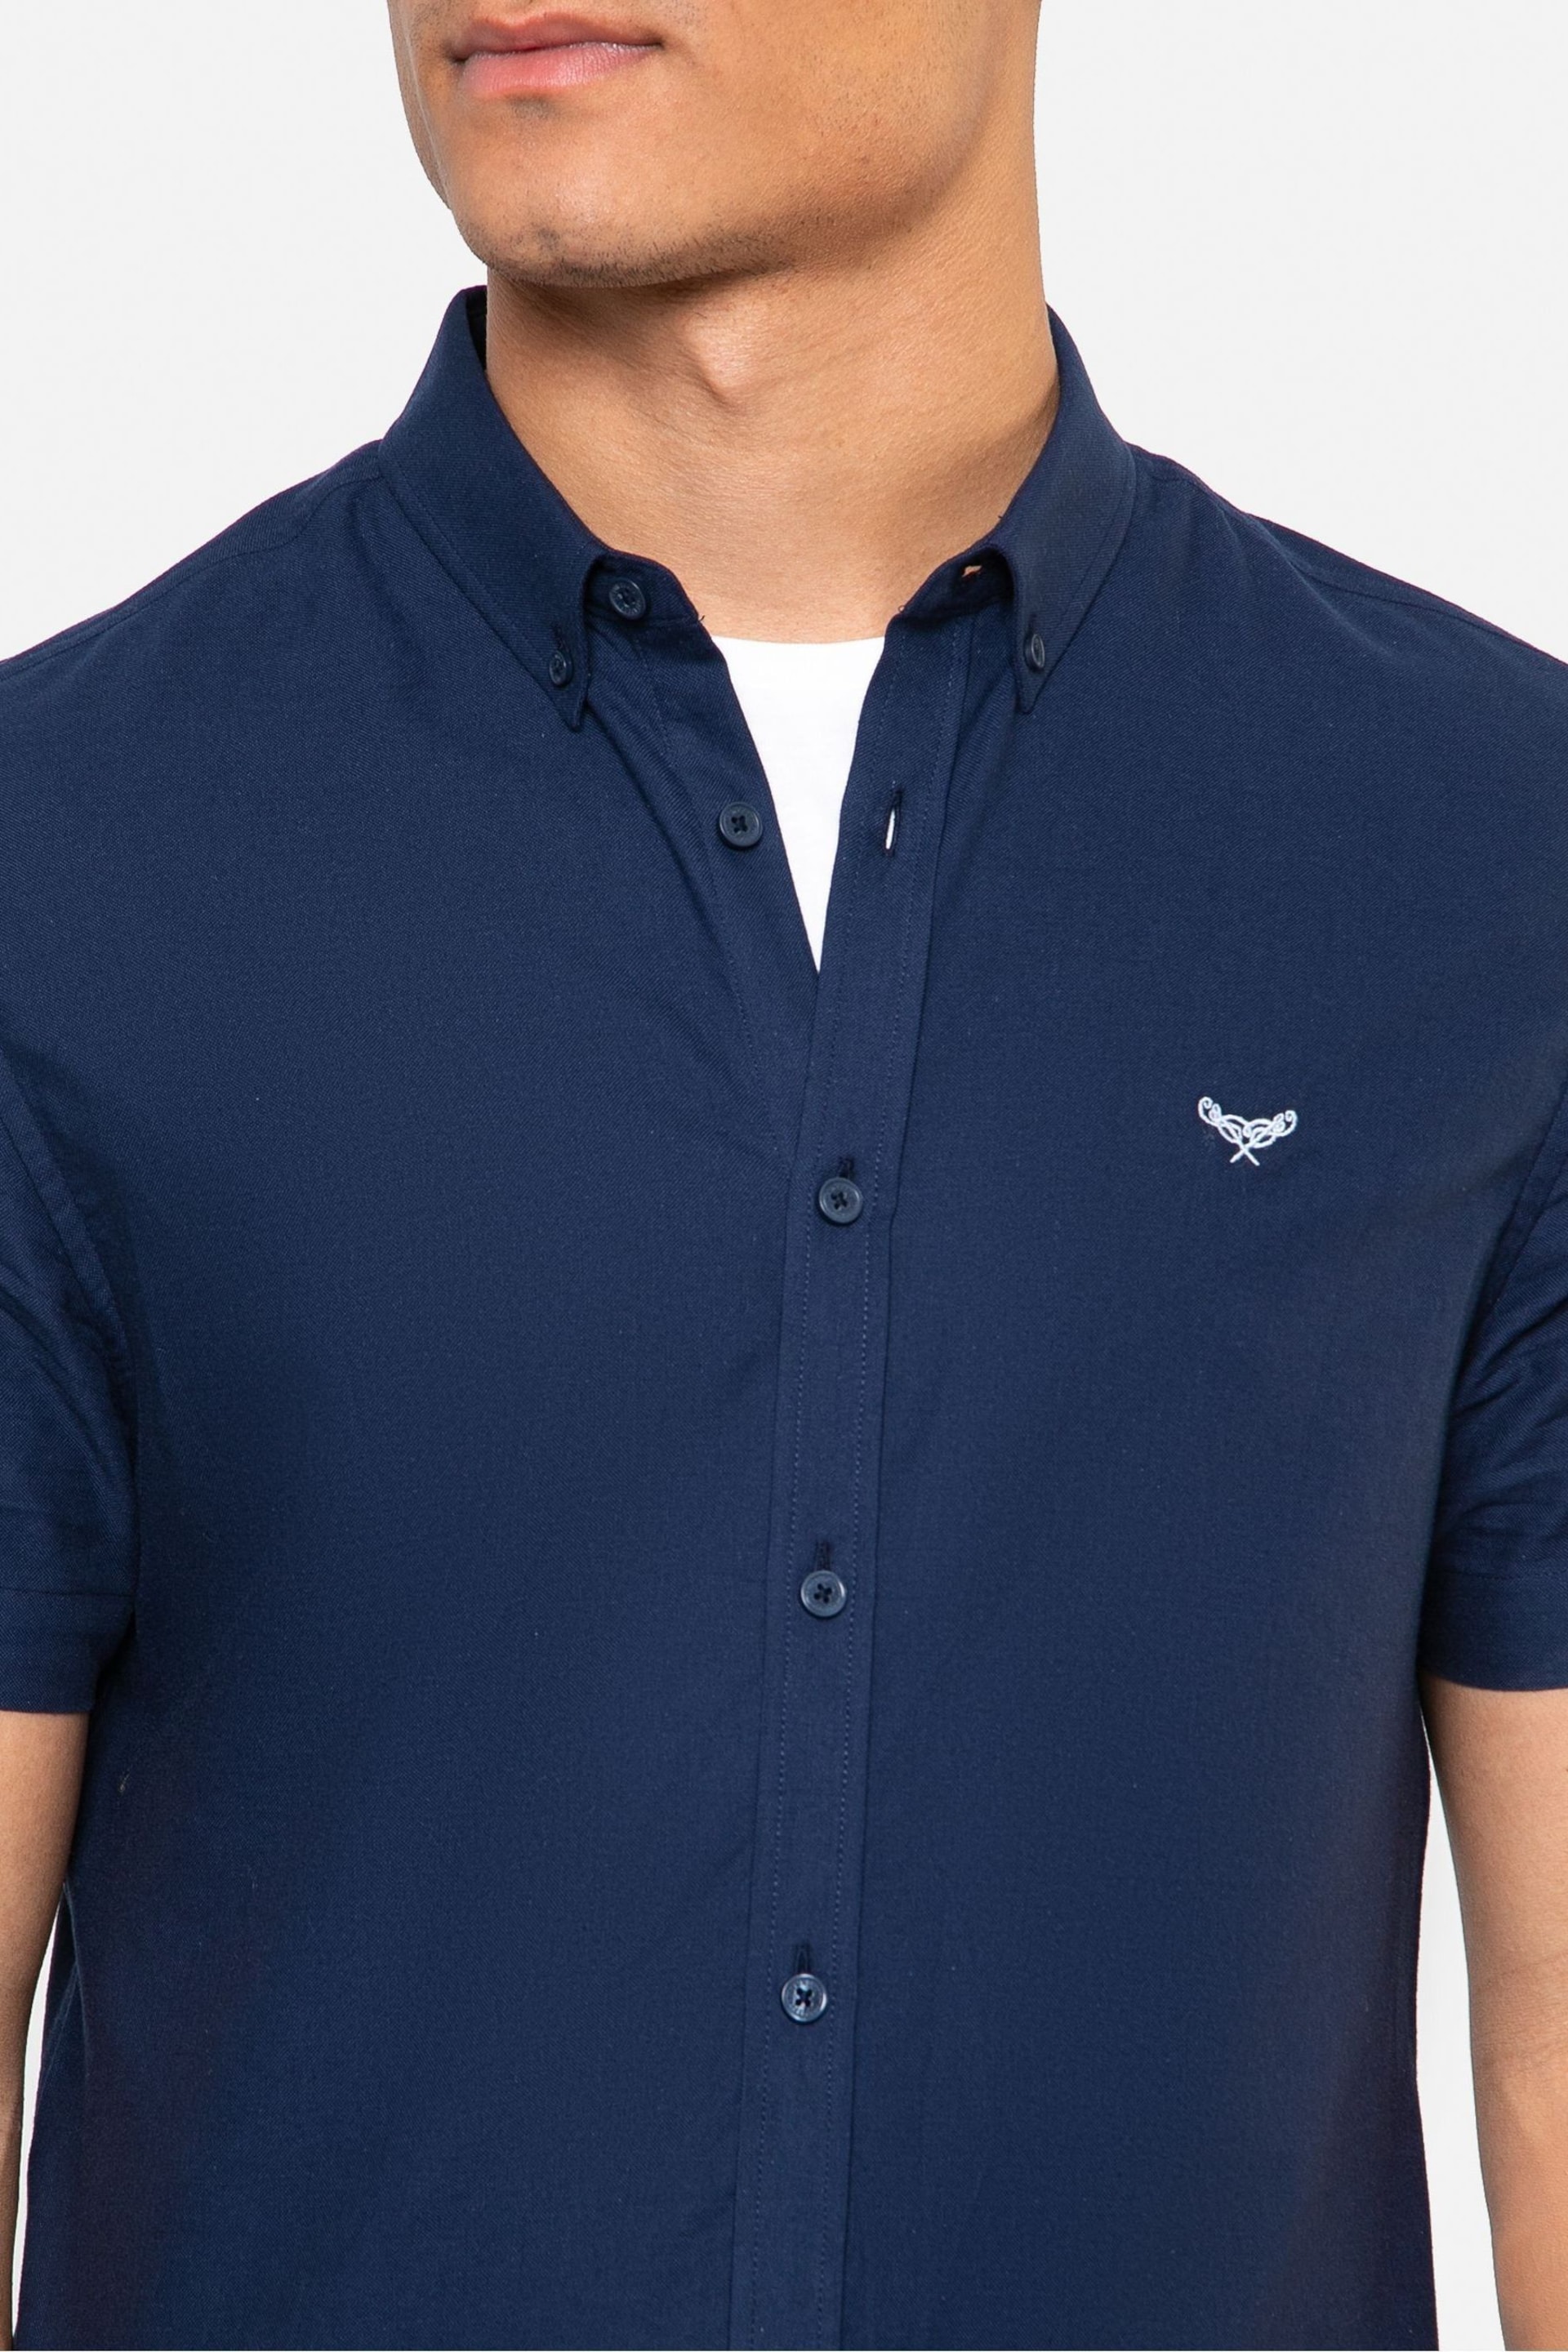 Threadbare Turquoise Blue Oxford Cotton Short Sleeve Shirt - Image 4 of 4